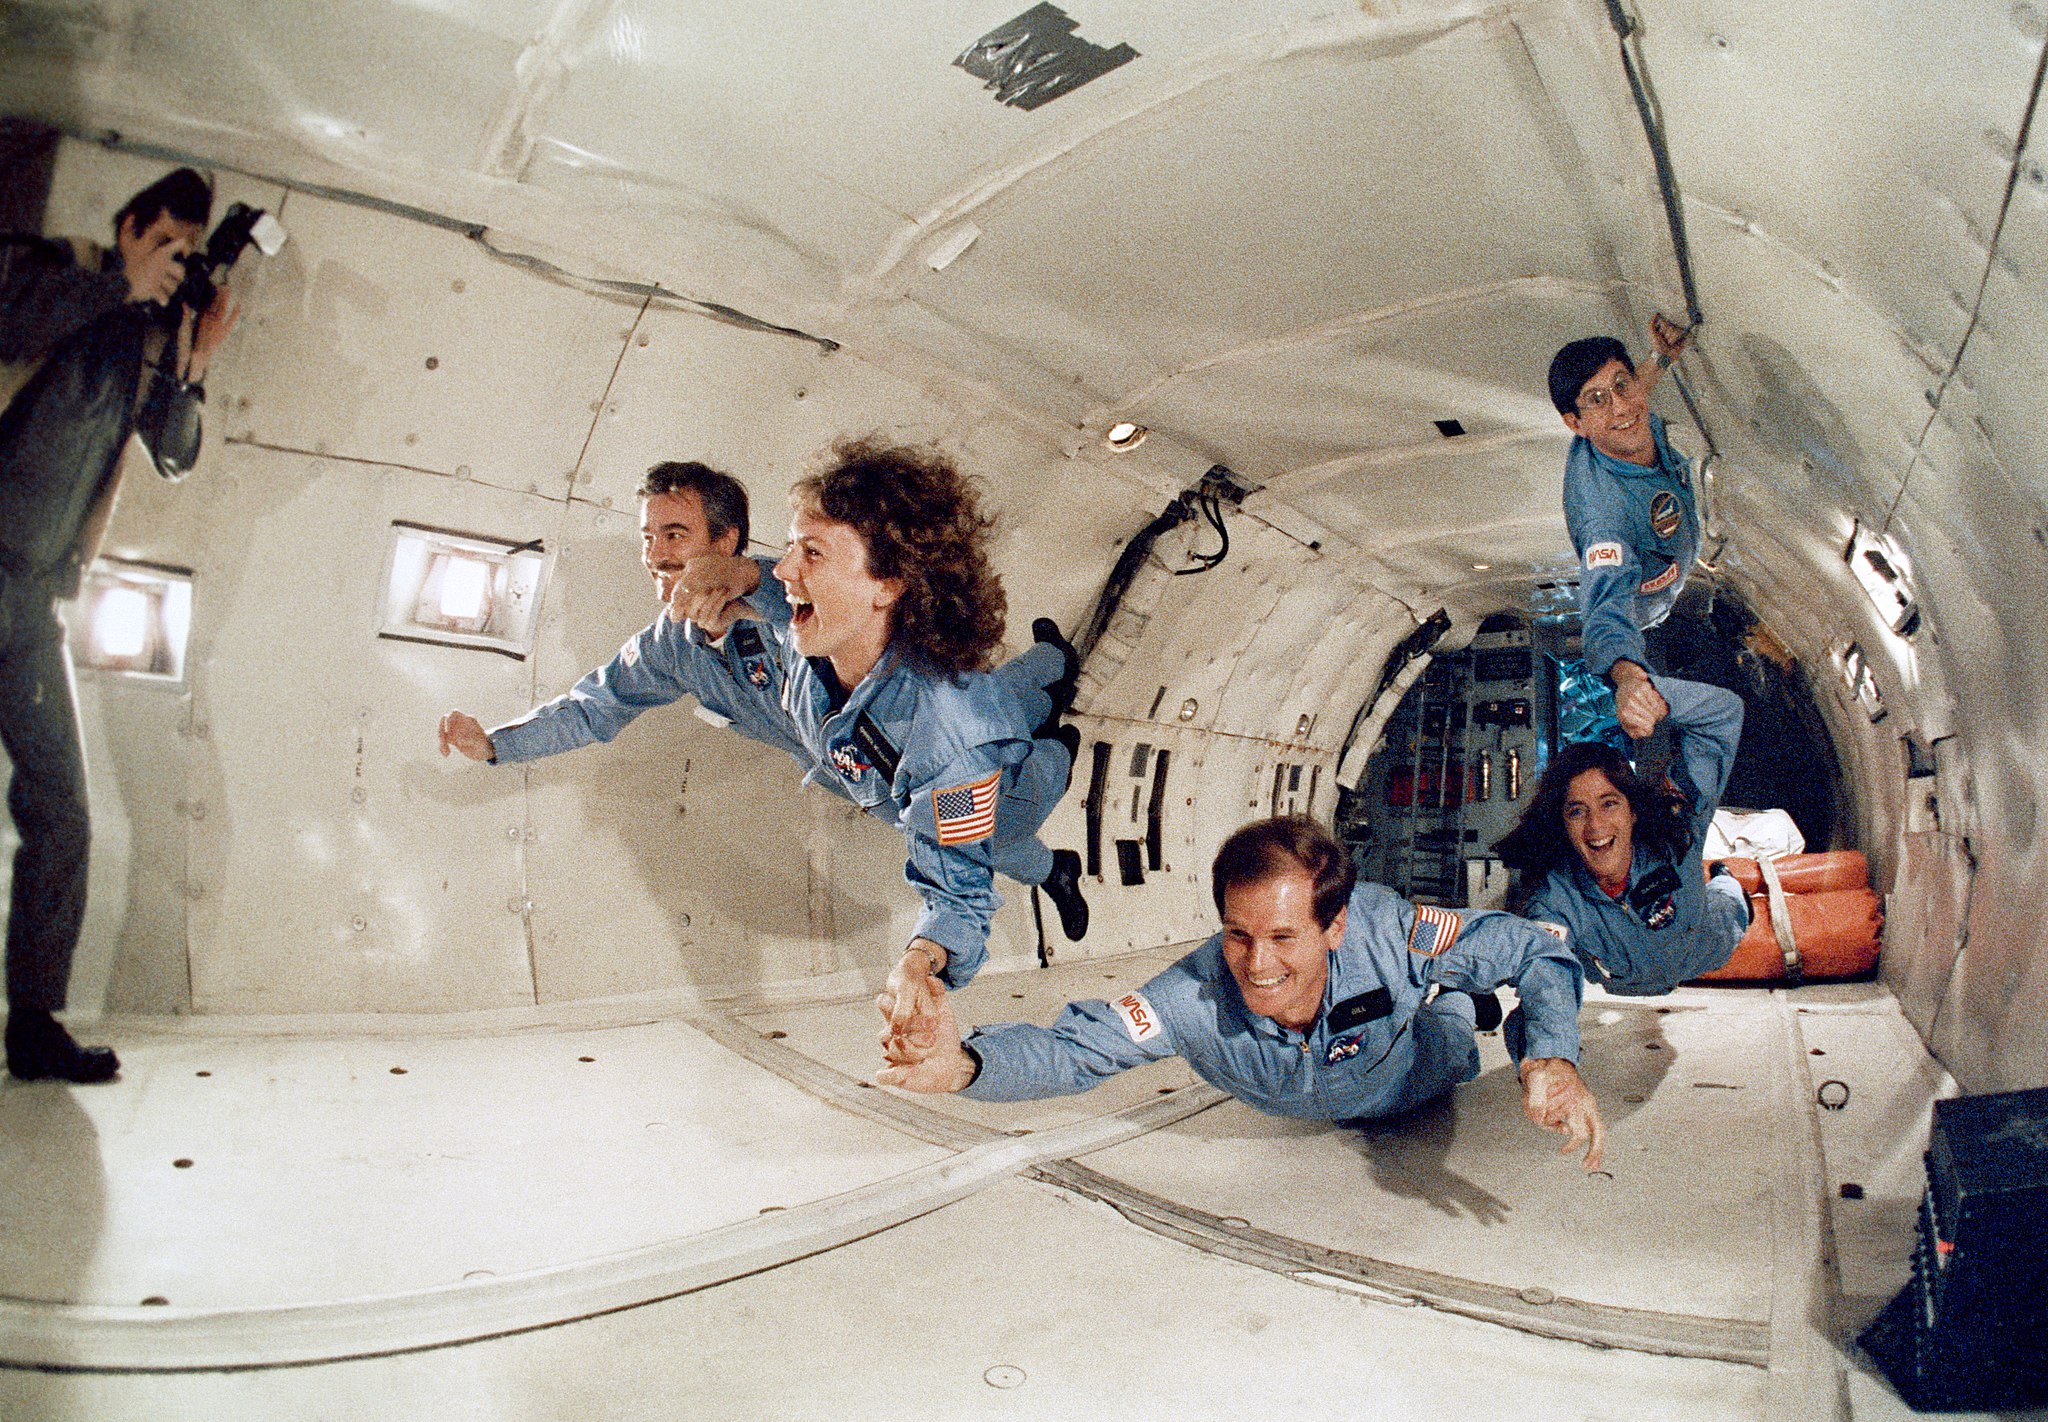 Left to right are Gerard Magilton, Sharon Christa McAuliffe, Representative Bill Nelson, Barbara R. Morgan, backup to McAuliffe and Robert J. Cenker. NASA.